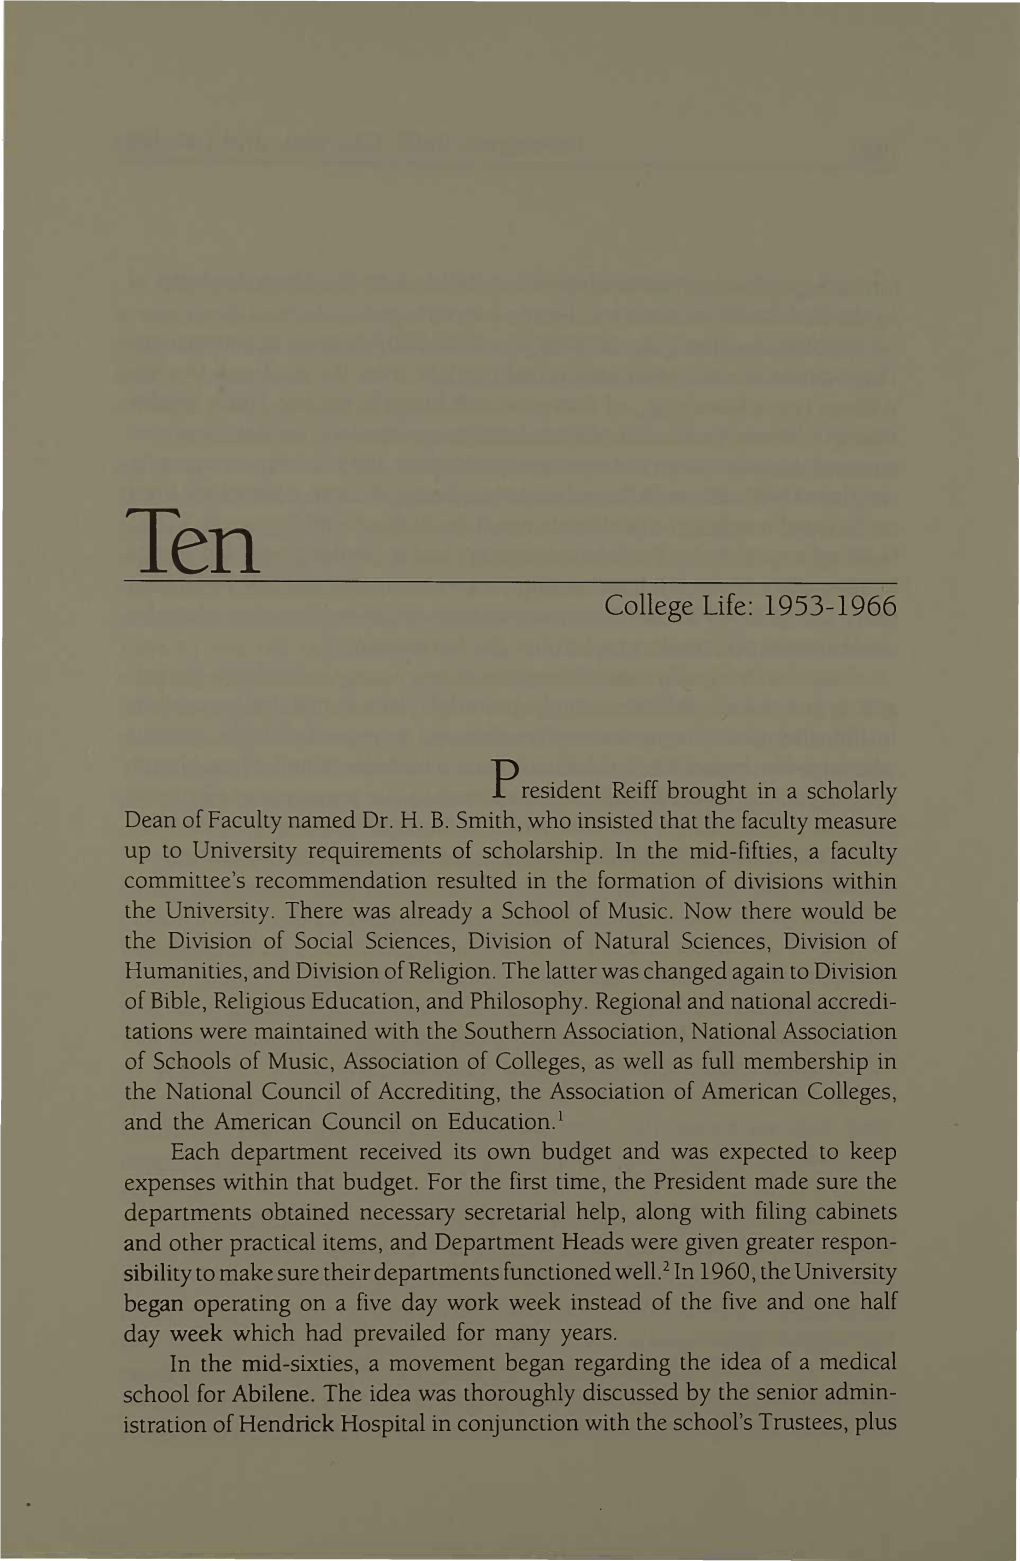 College Life: 1953-1966